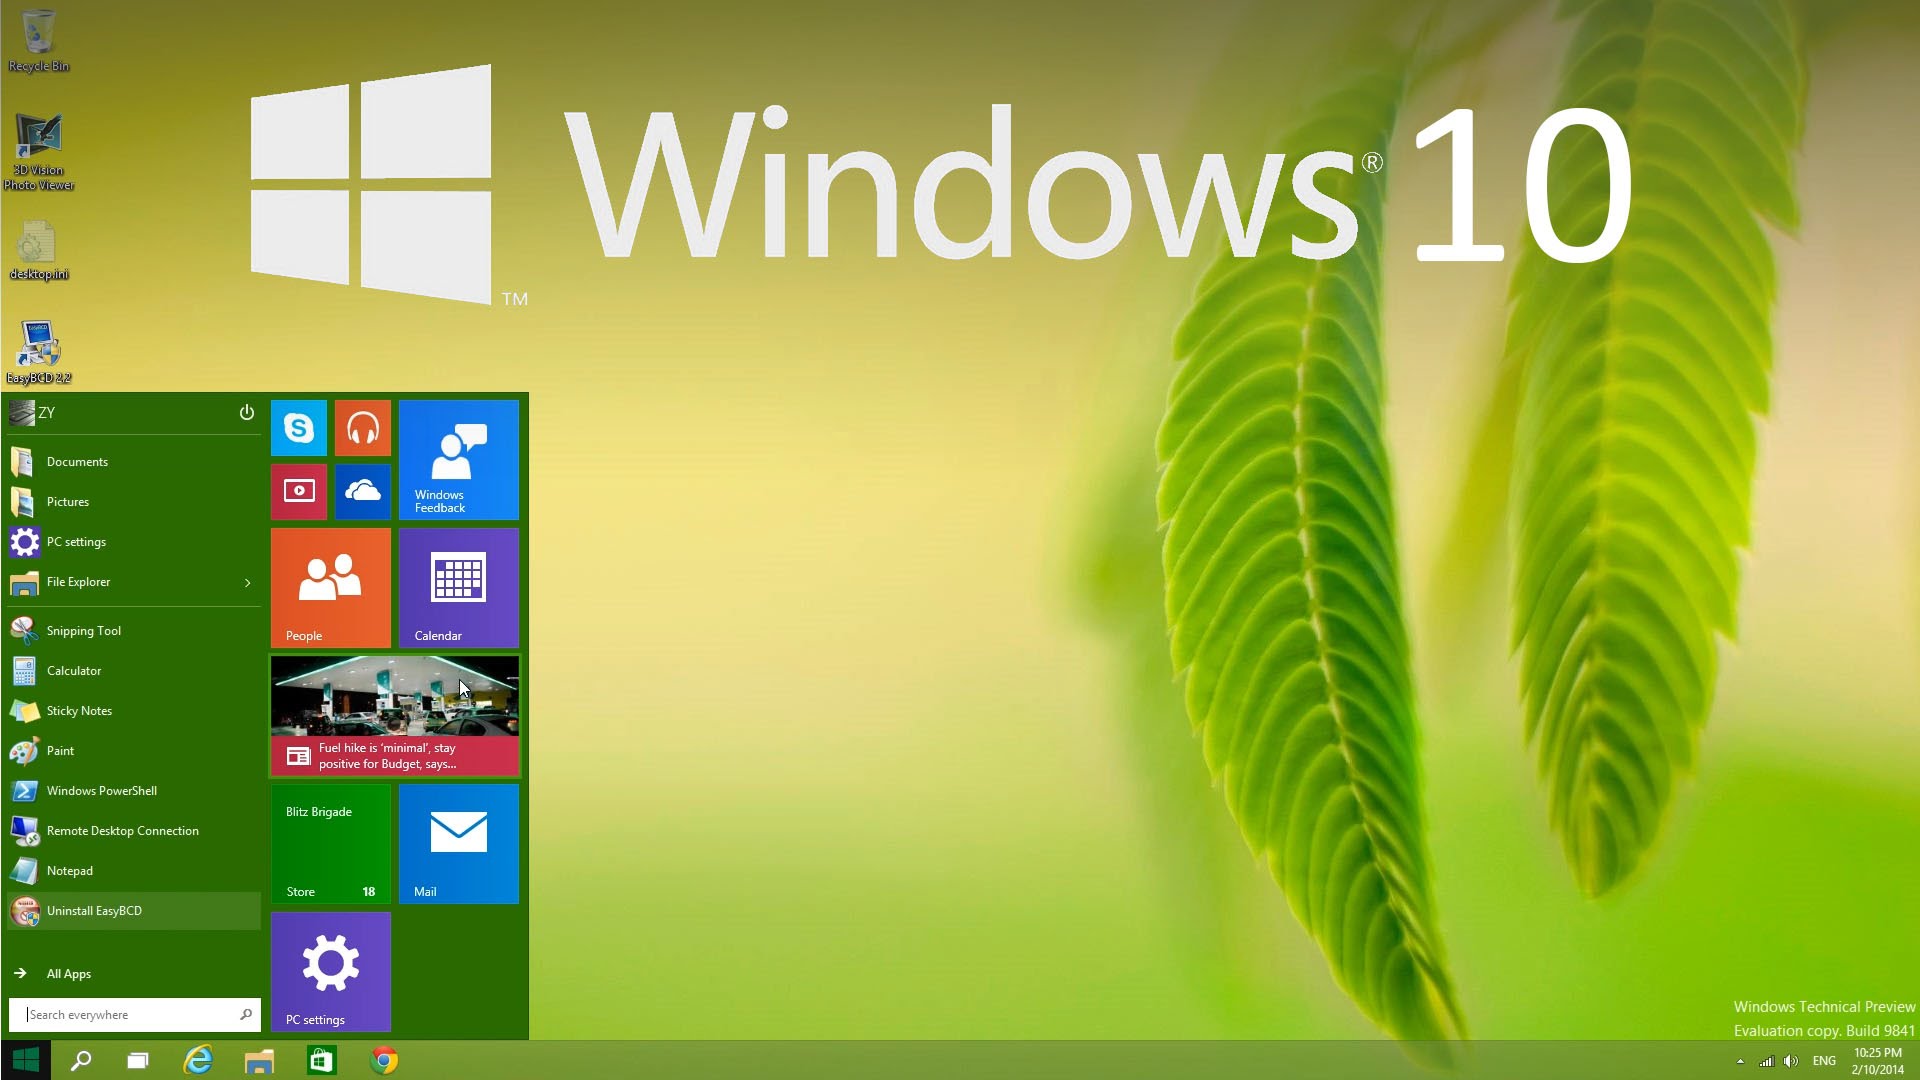 microsoft software download windows 10